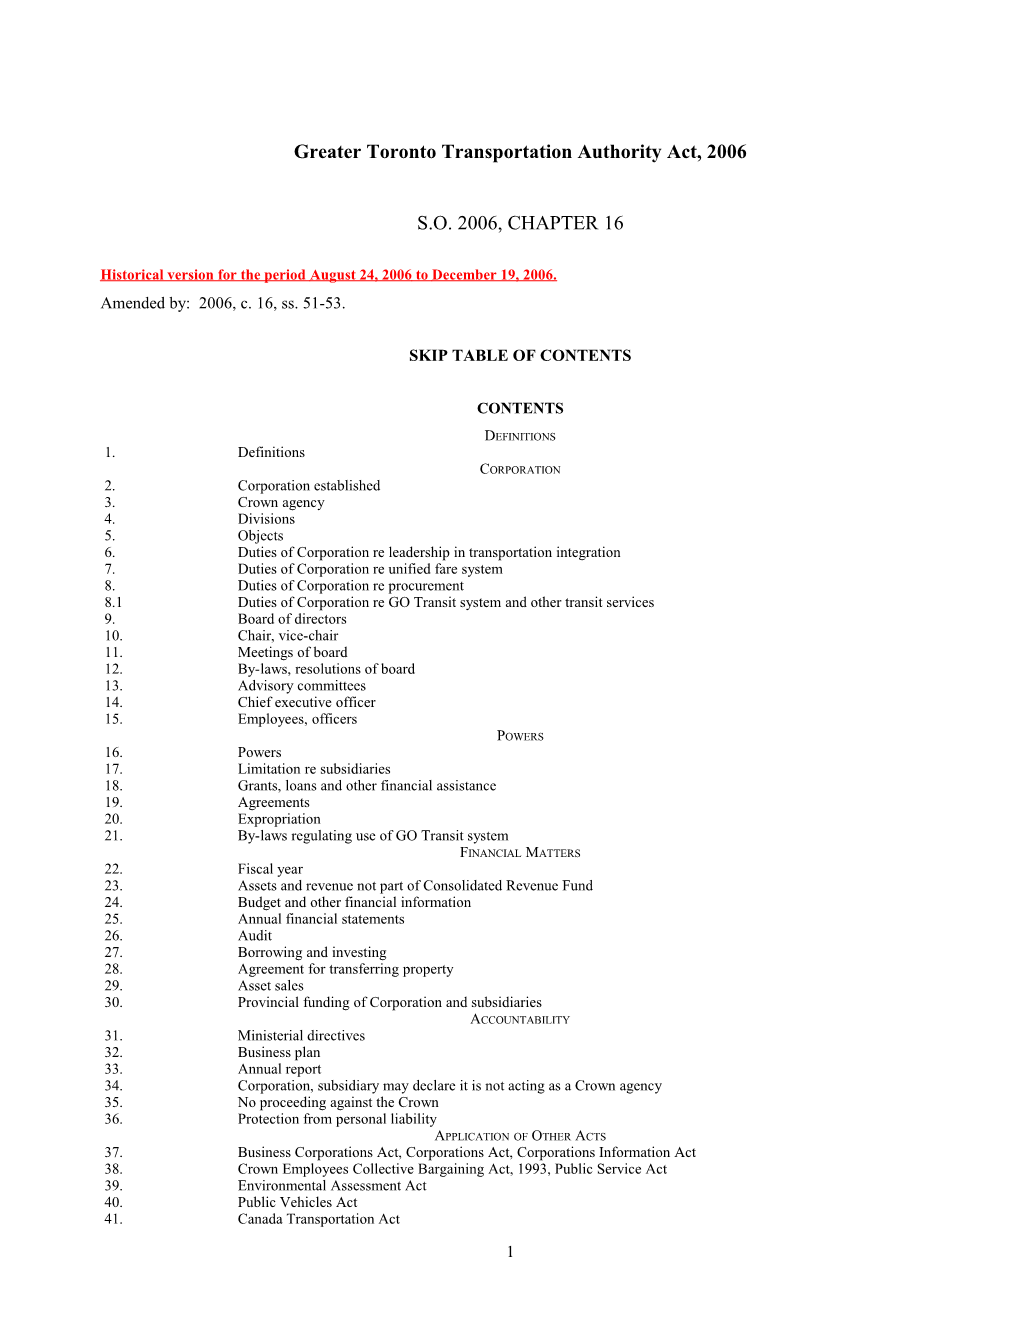 Greater Toronto Transportation Authority Act, 2006, S.O. 2006, C. 16